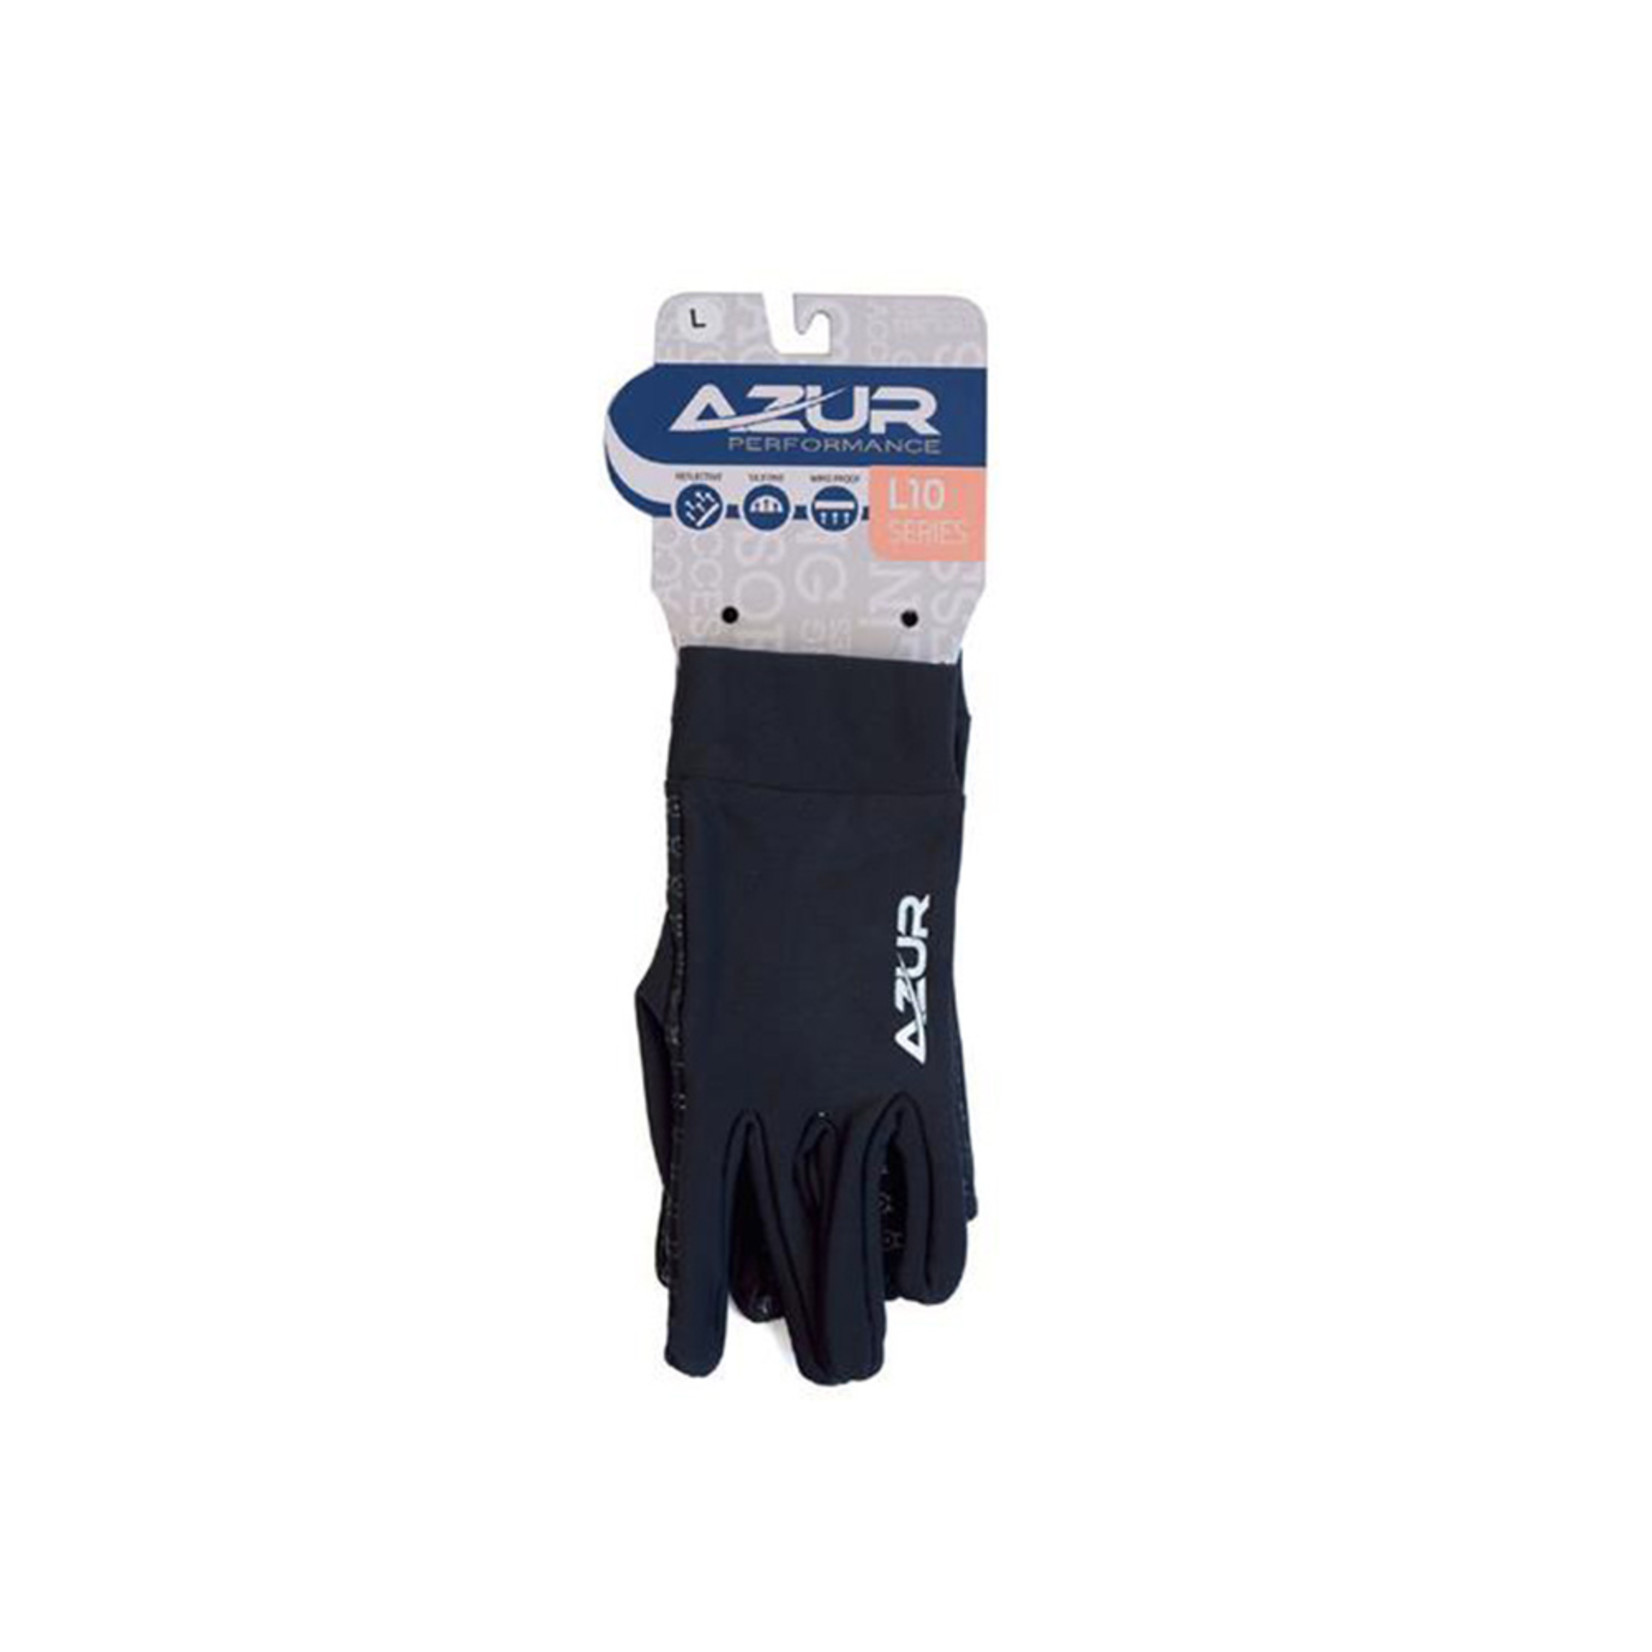 Azur Azur Bike/Cycling Glove - Reflective Silicone Palm - L10 Series - Black - Small